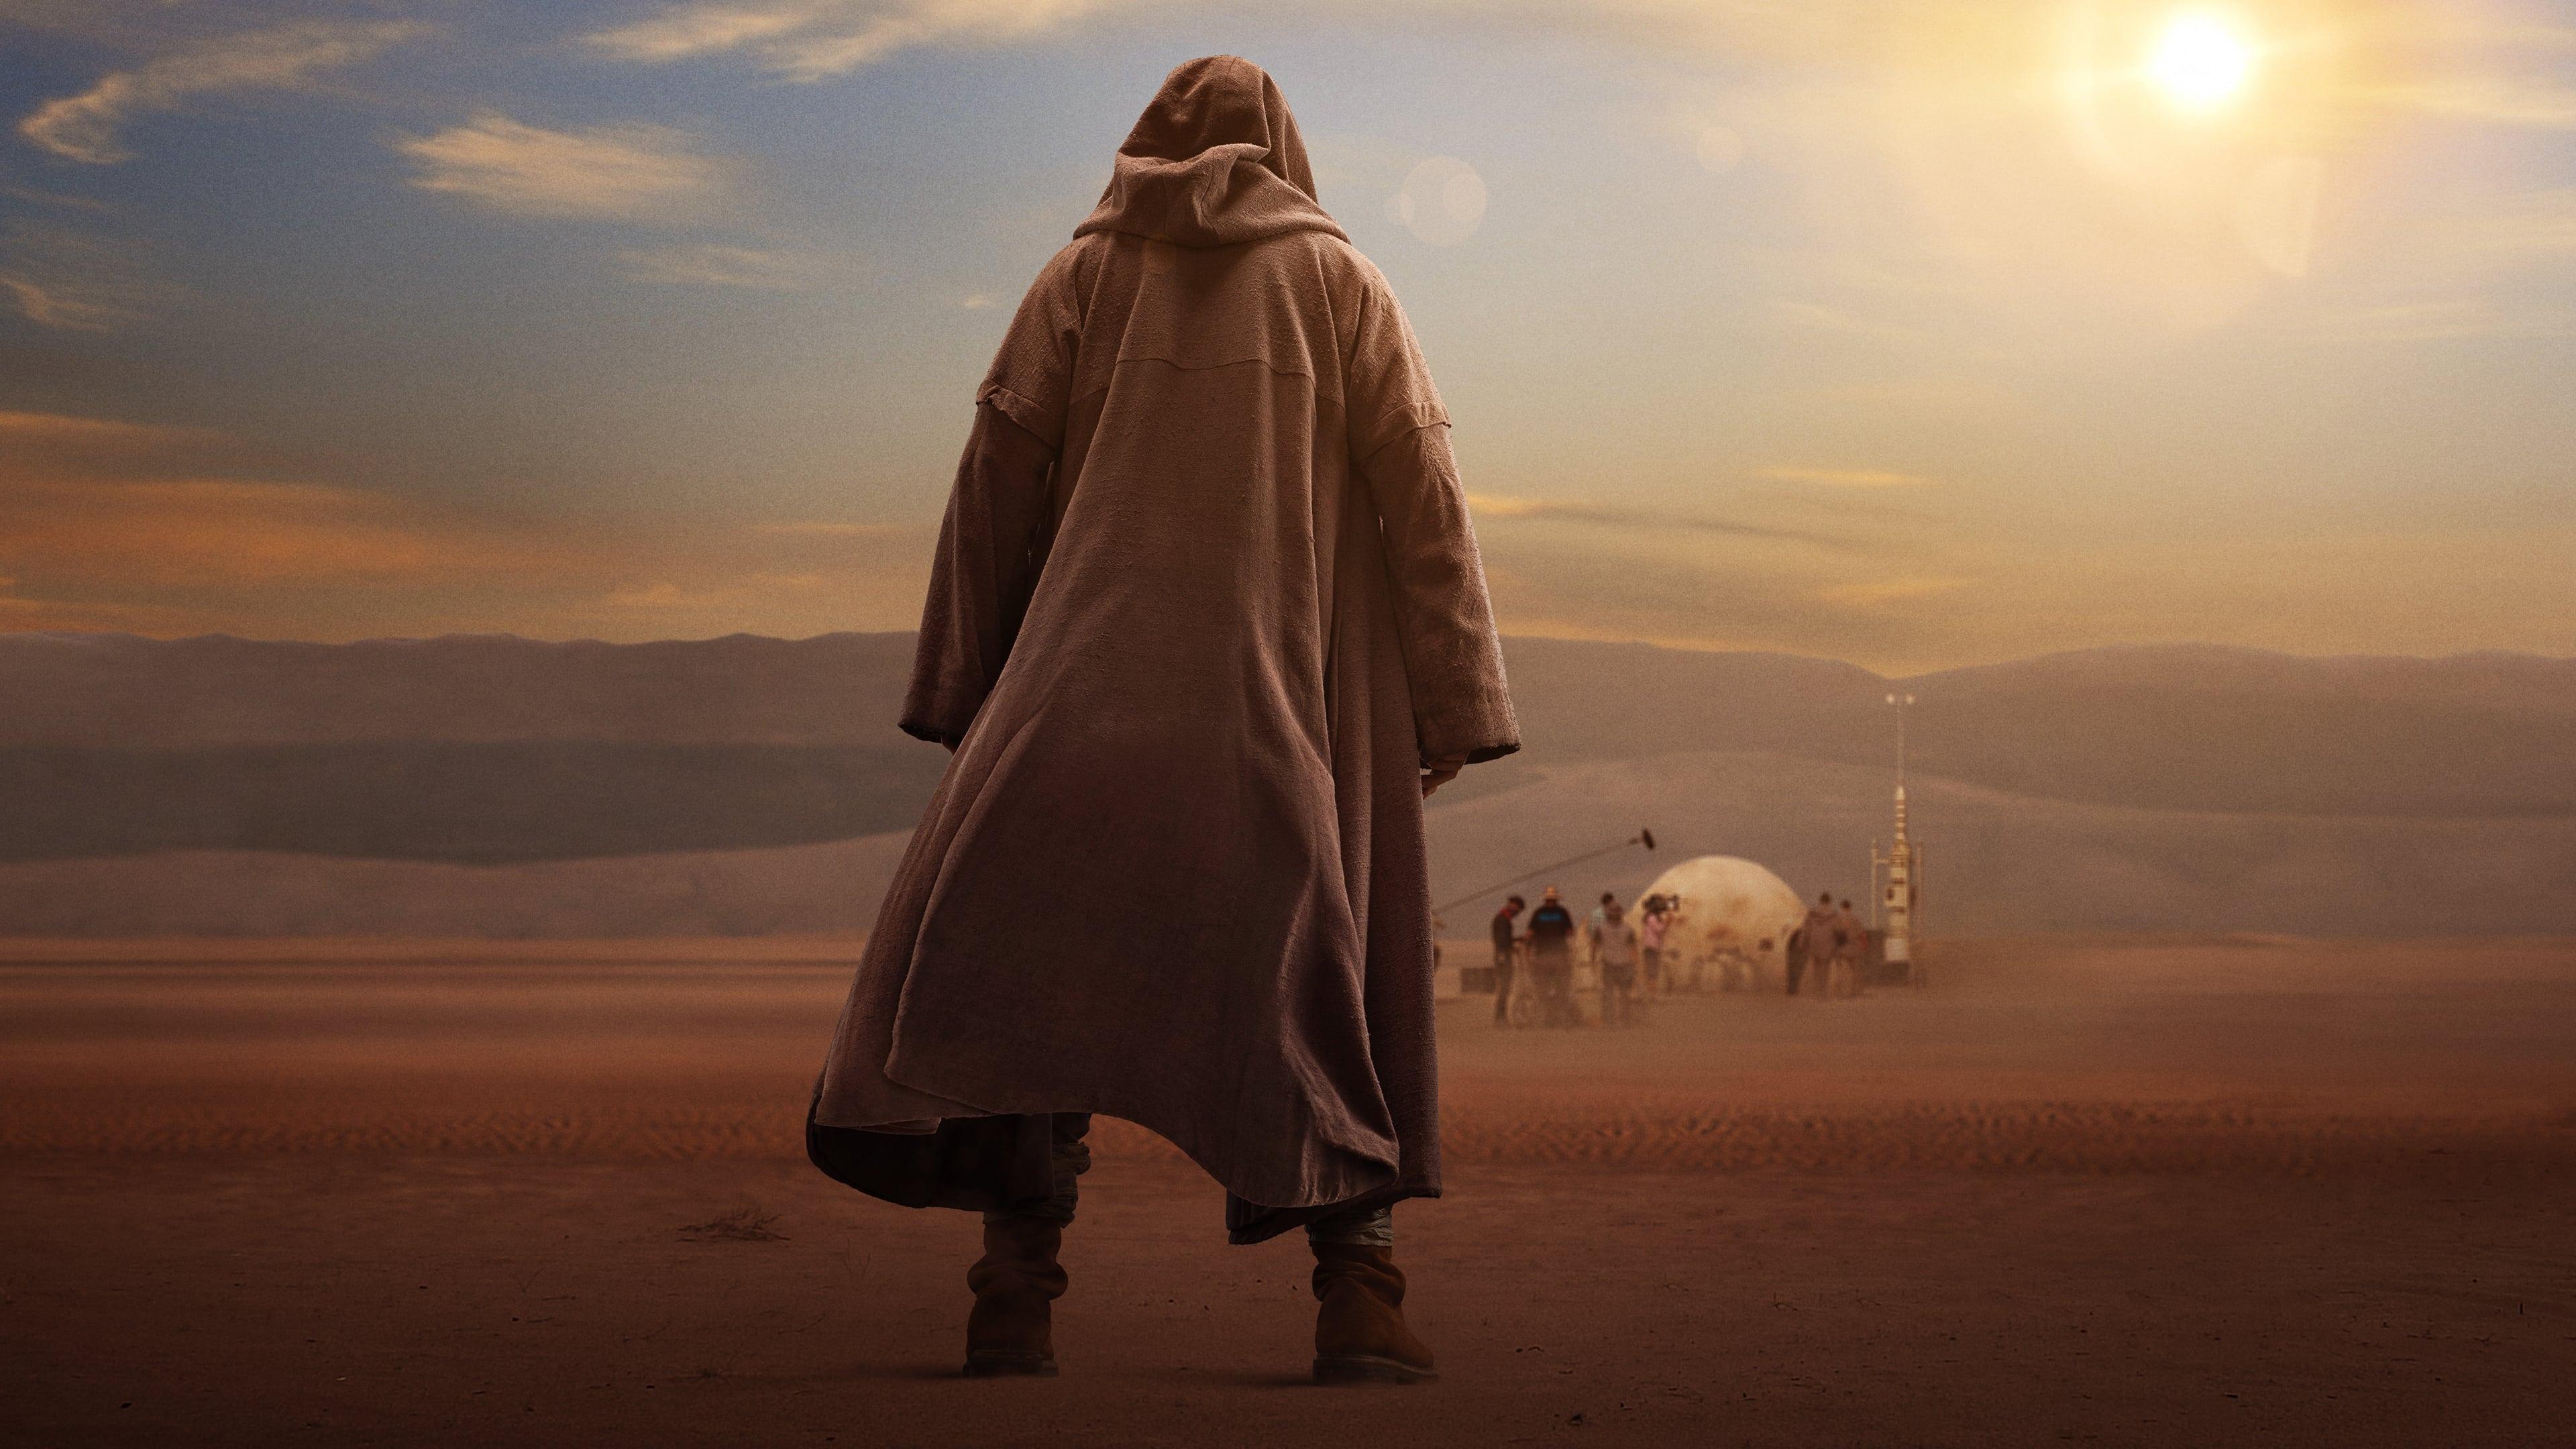 Obi-Wan Kenobi: A Jedi's Return backdrop